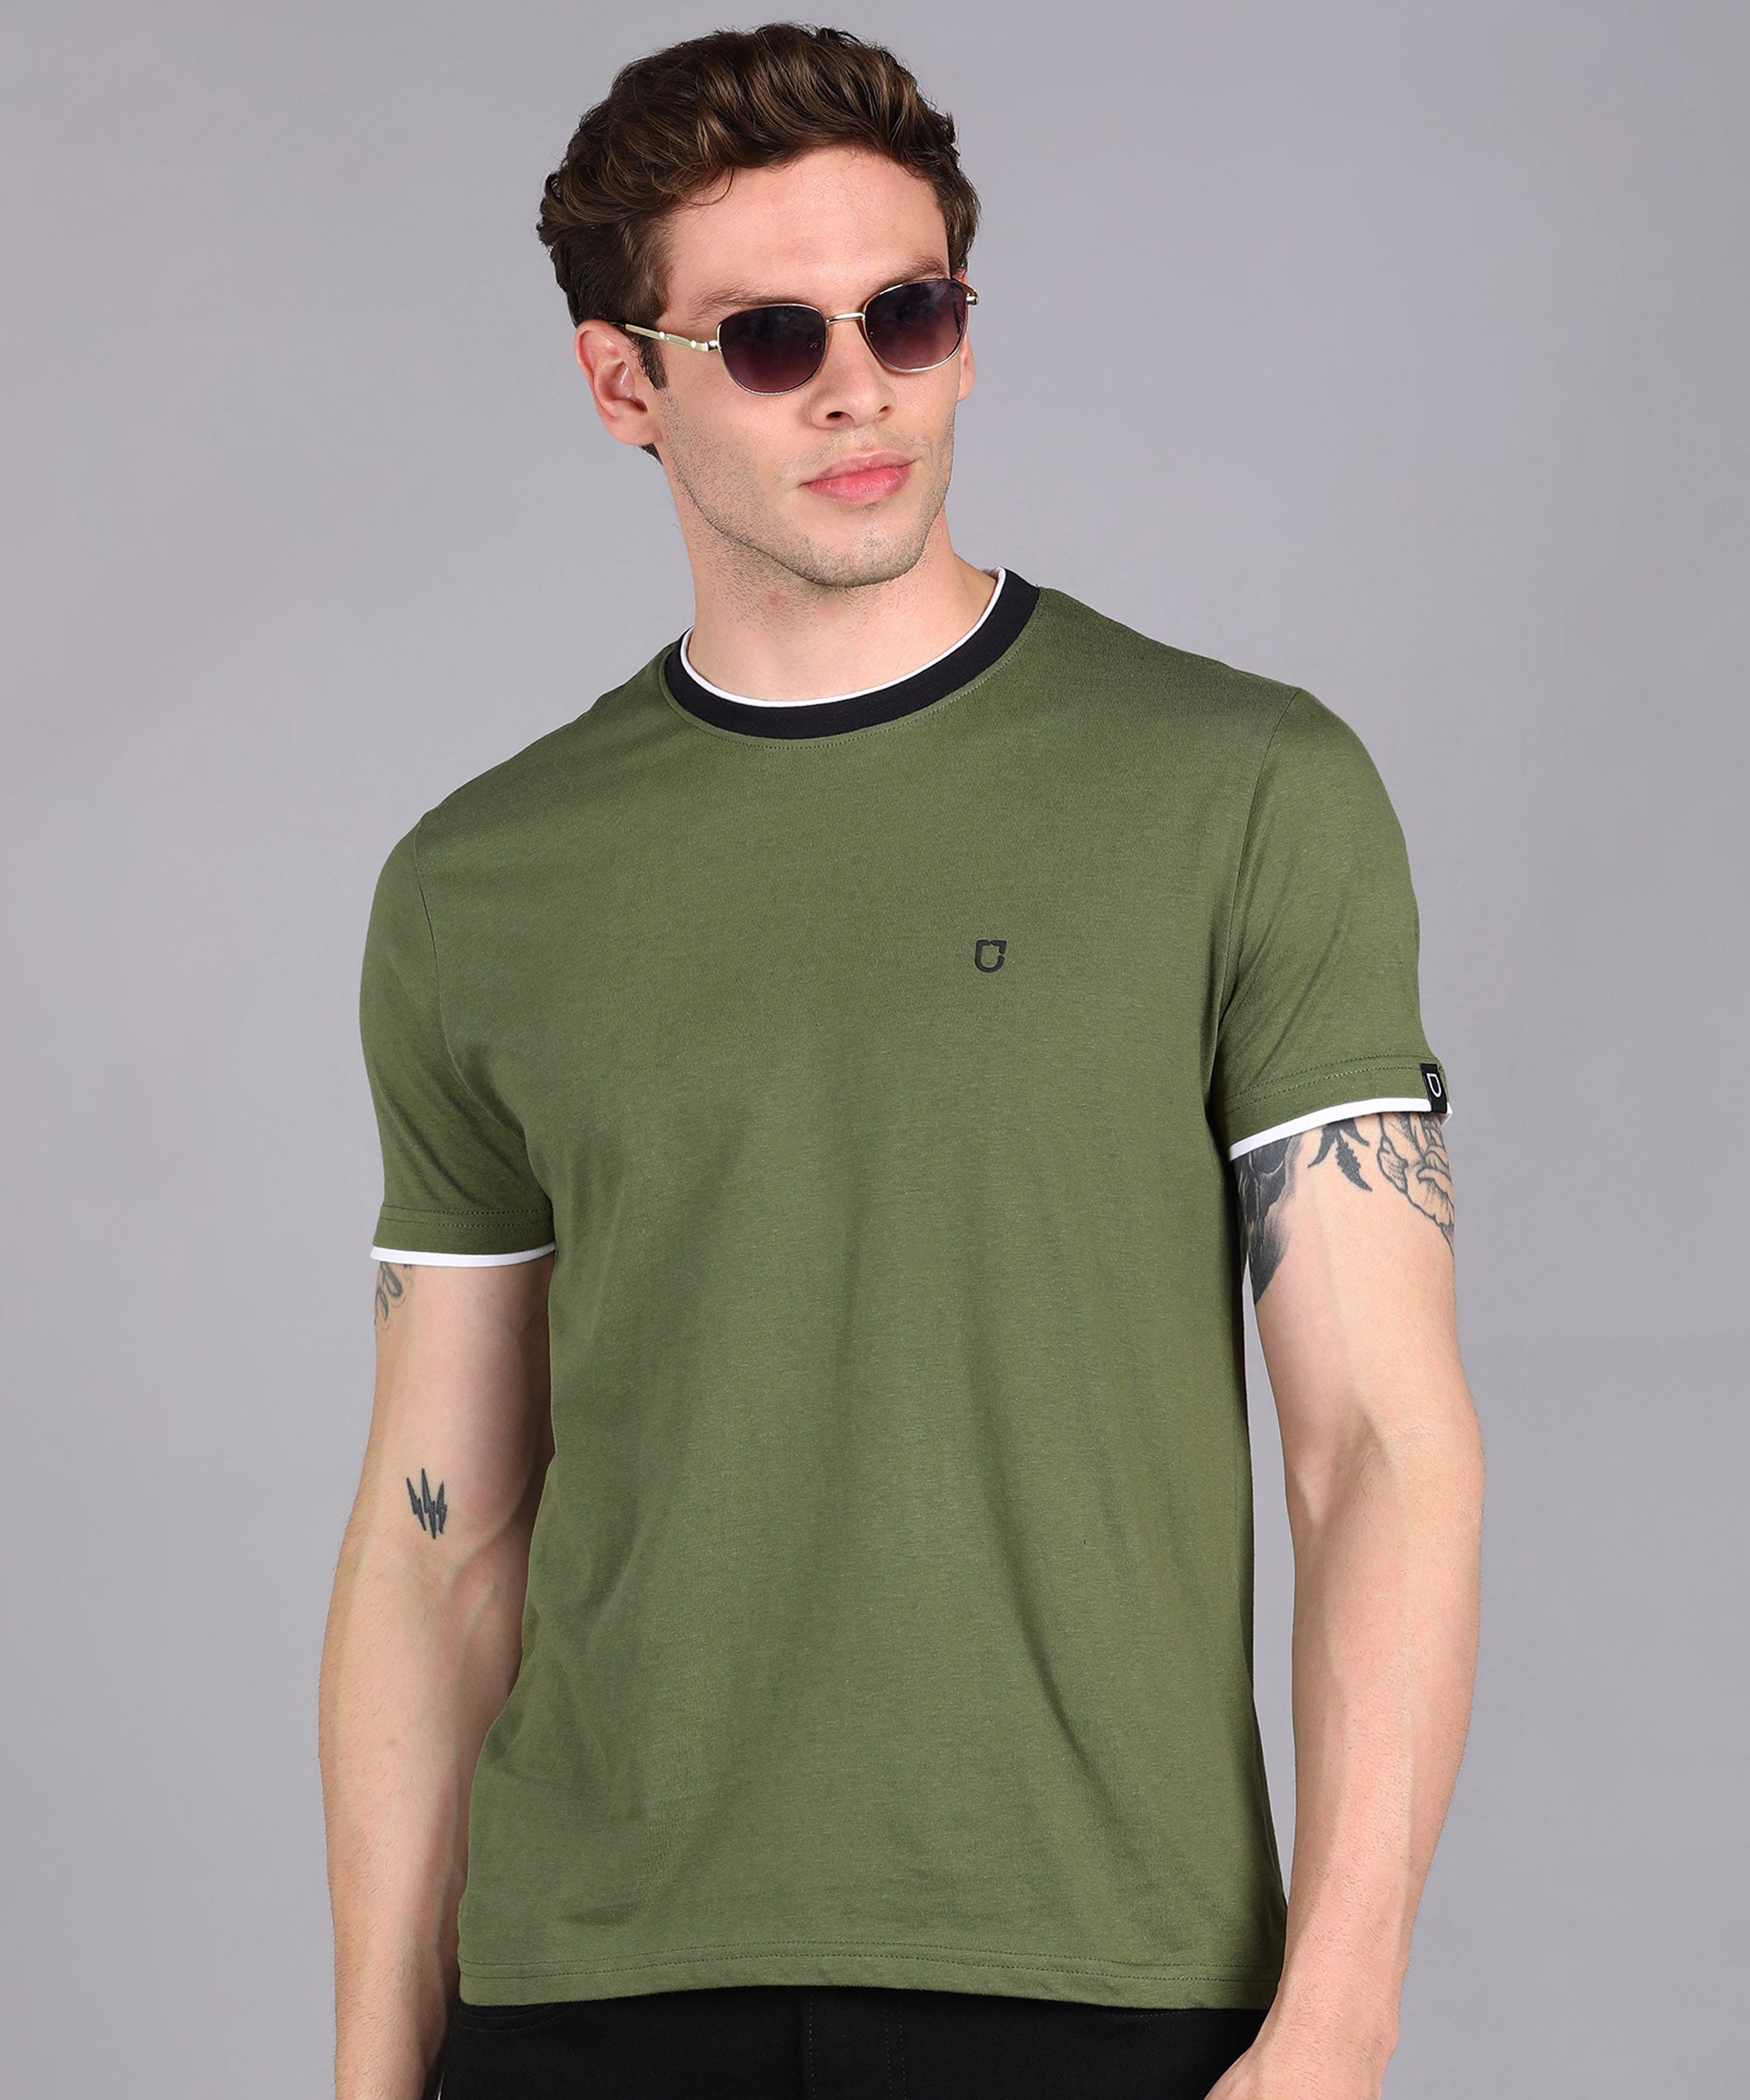 Urbano Fashion Men's Solid Olive Round Neck Half Sleeve Slim Fit Cotton T-Shirt